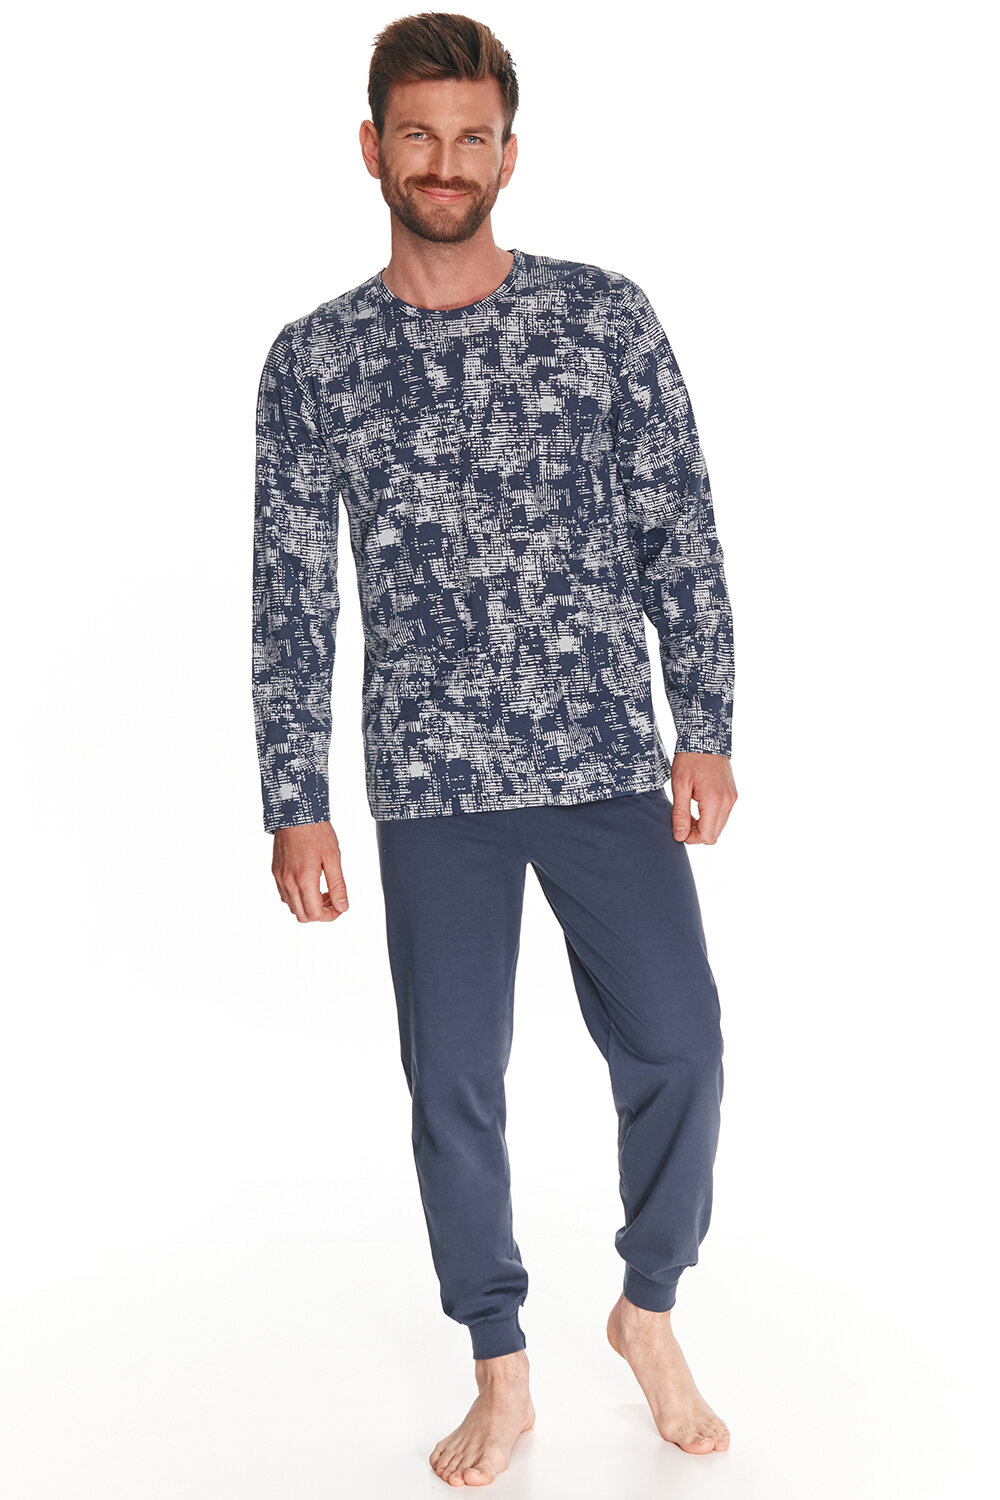 Пижама мужская TARO Greg 2643-2644-01, синий, хлопок 100% (Размер: XL)